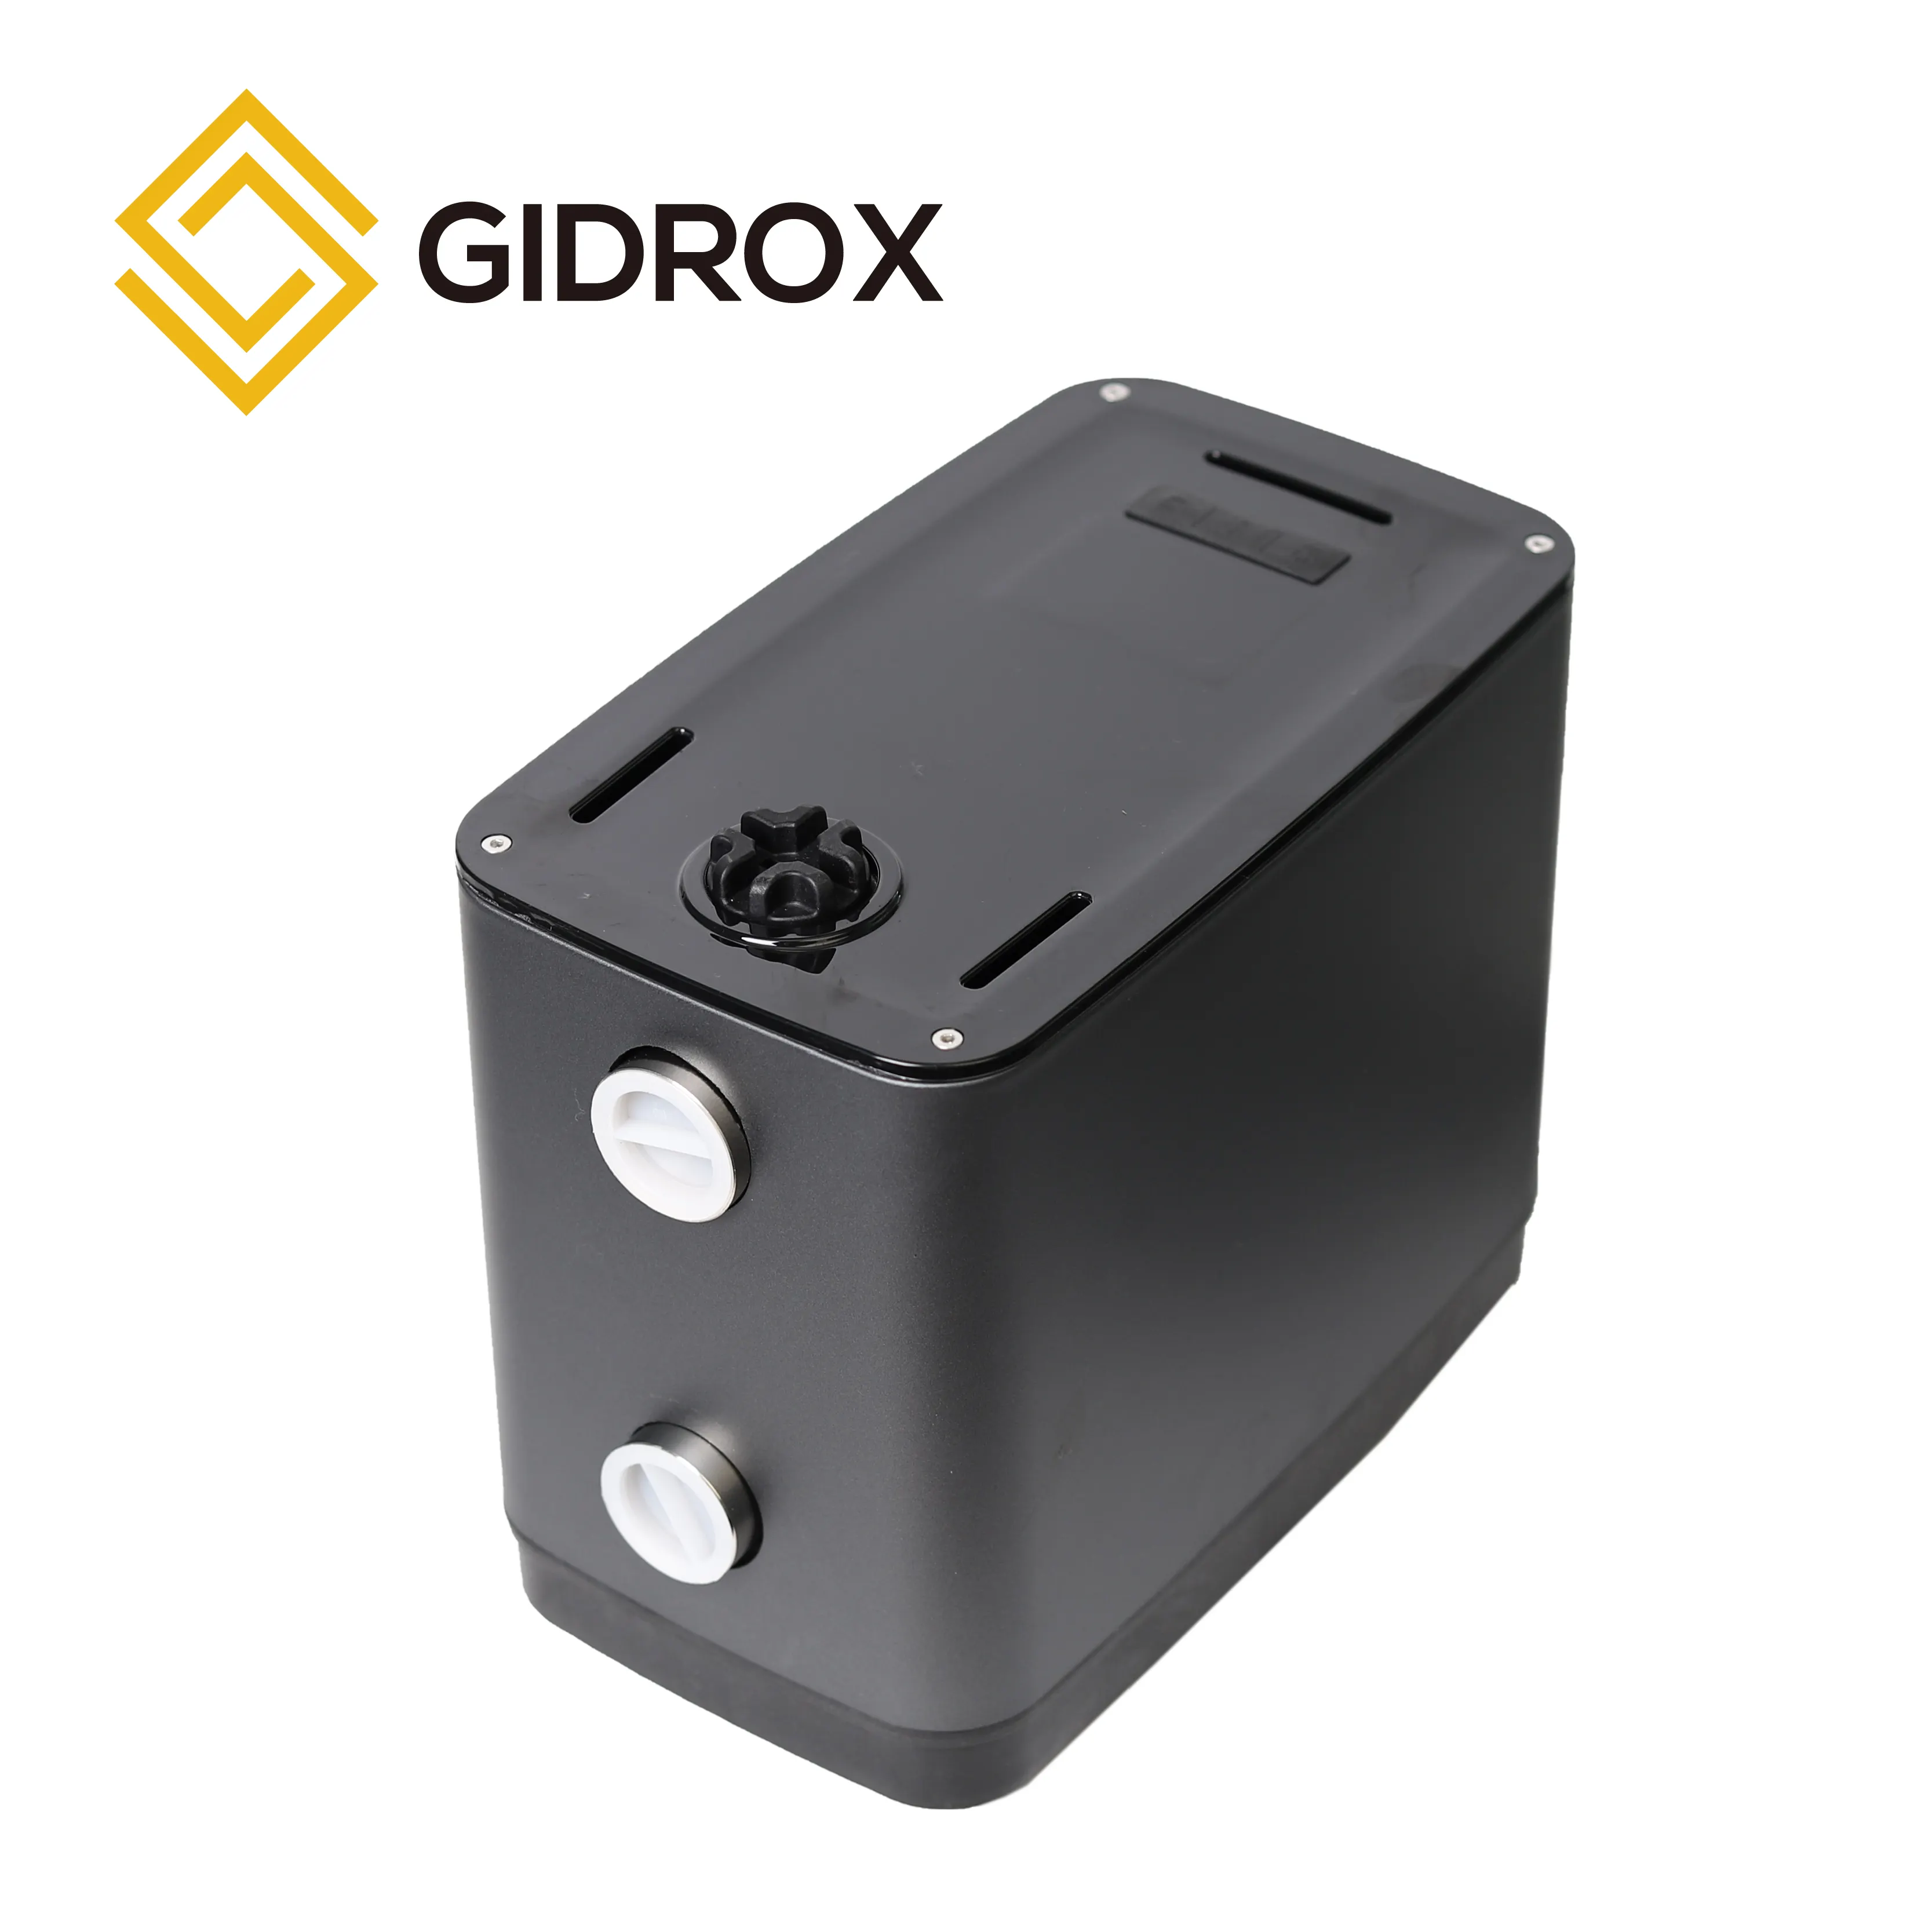 GIDROX 워터 부스터 펌프 가정용 지능형 가변 속도 부스터 시스템 자체 프라이밍 영구 자석 펌프